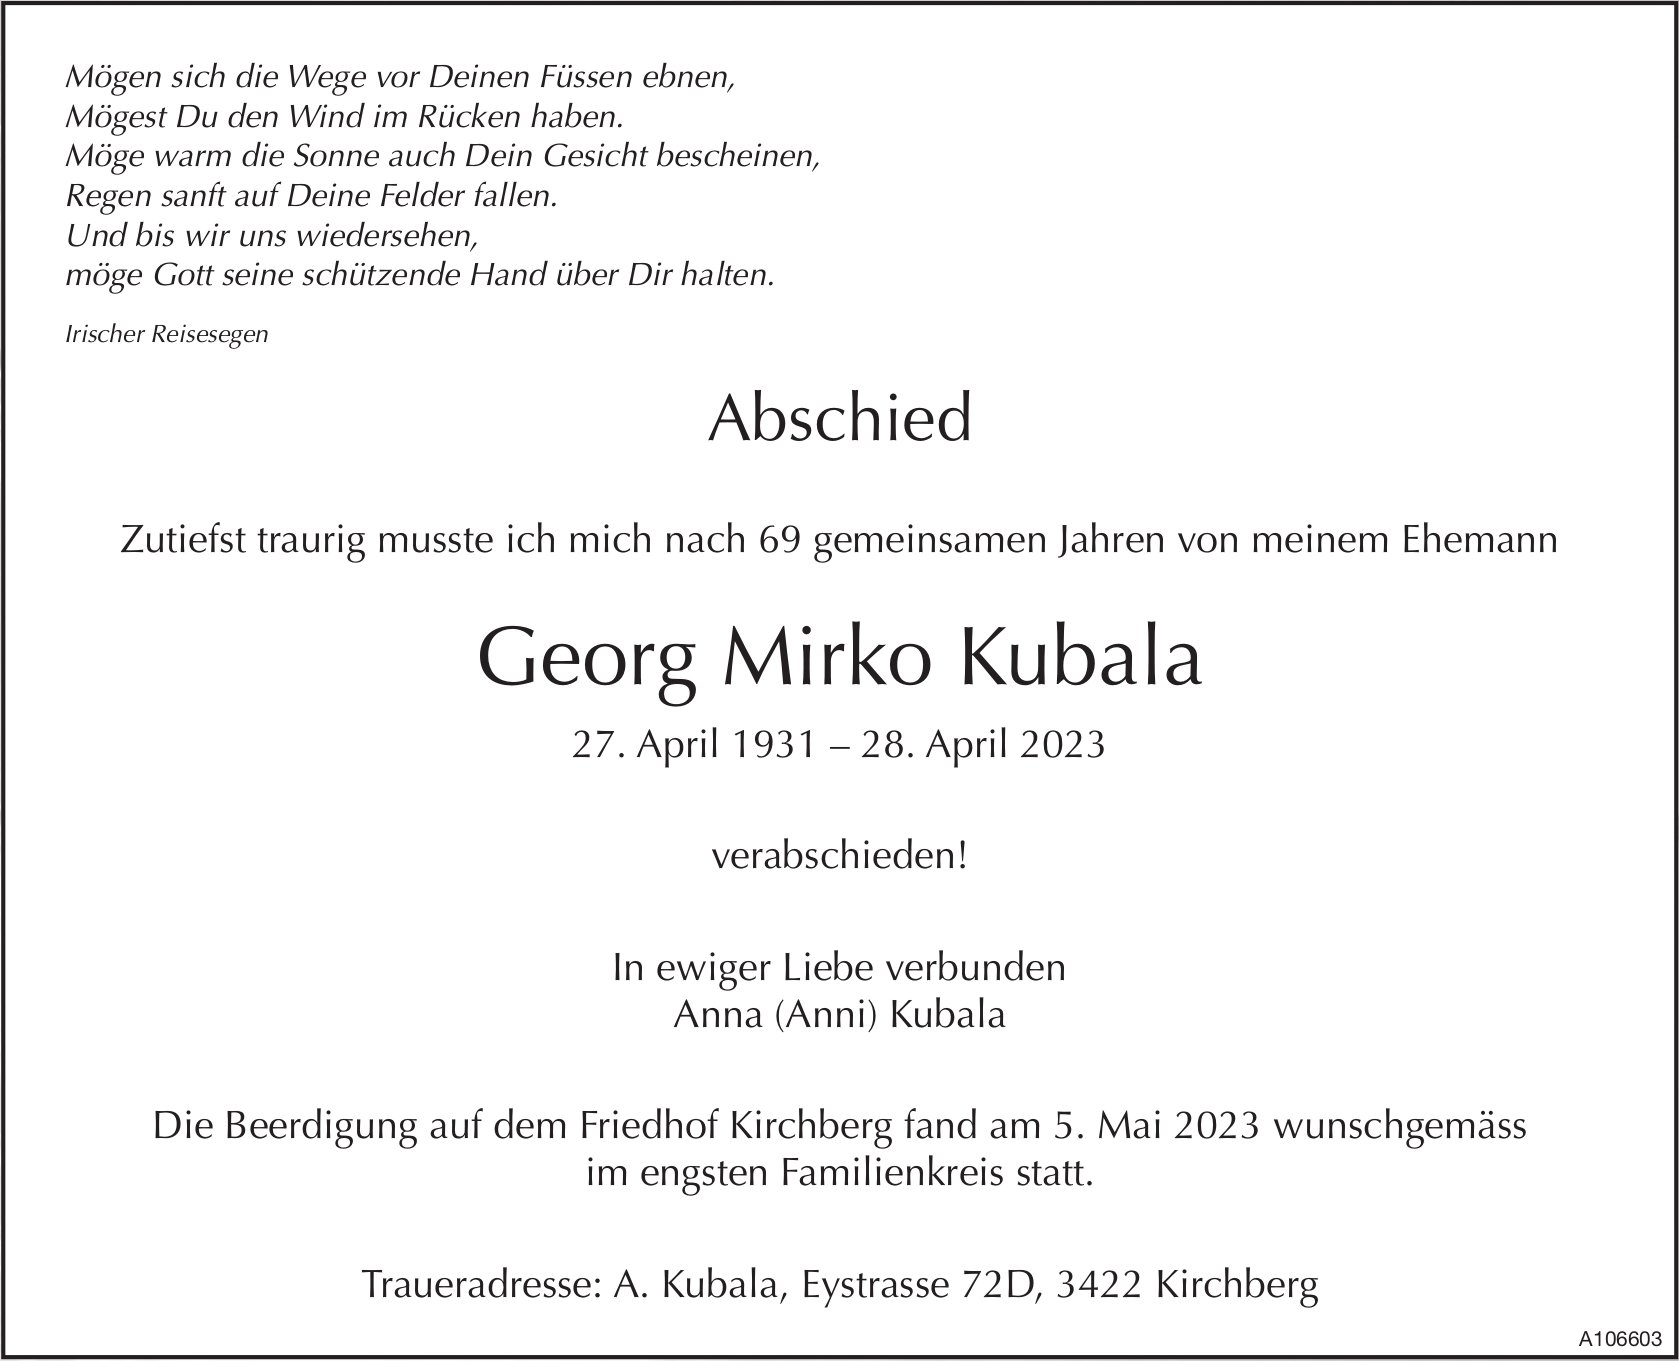 Georg Mirko Kubala, April 2023 / TA